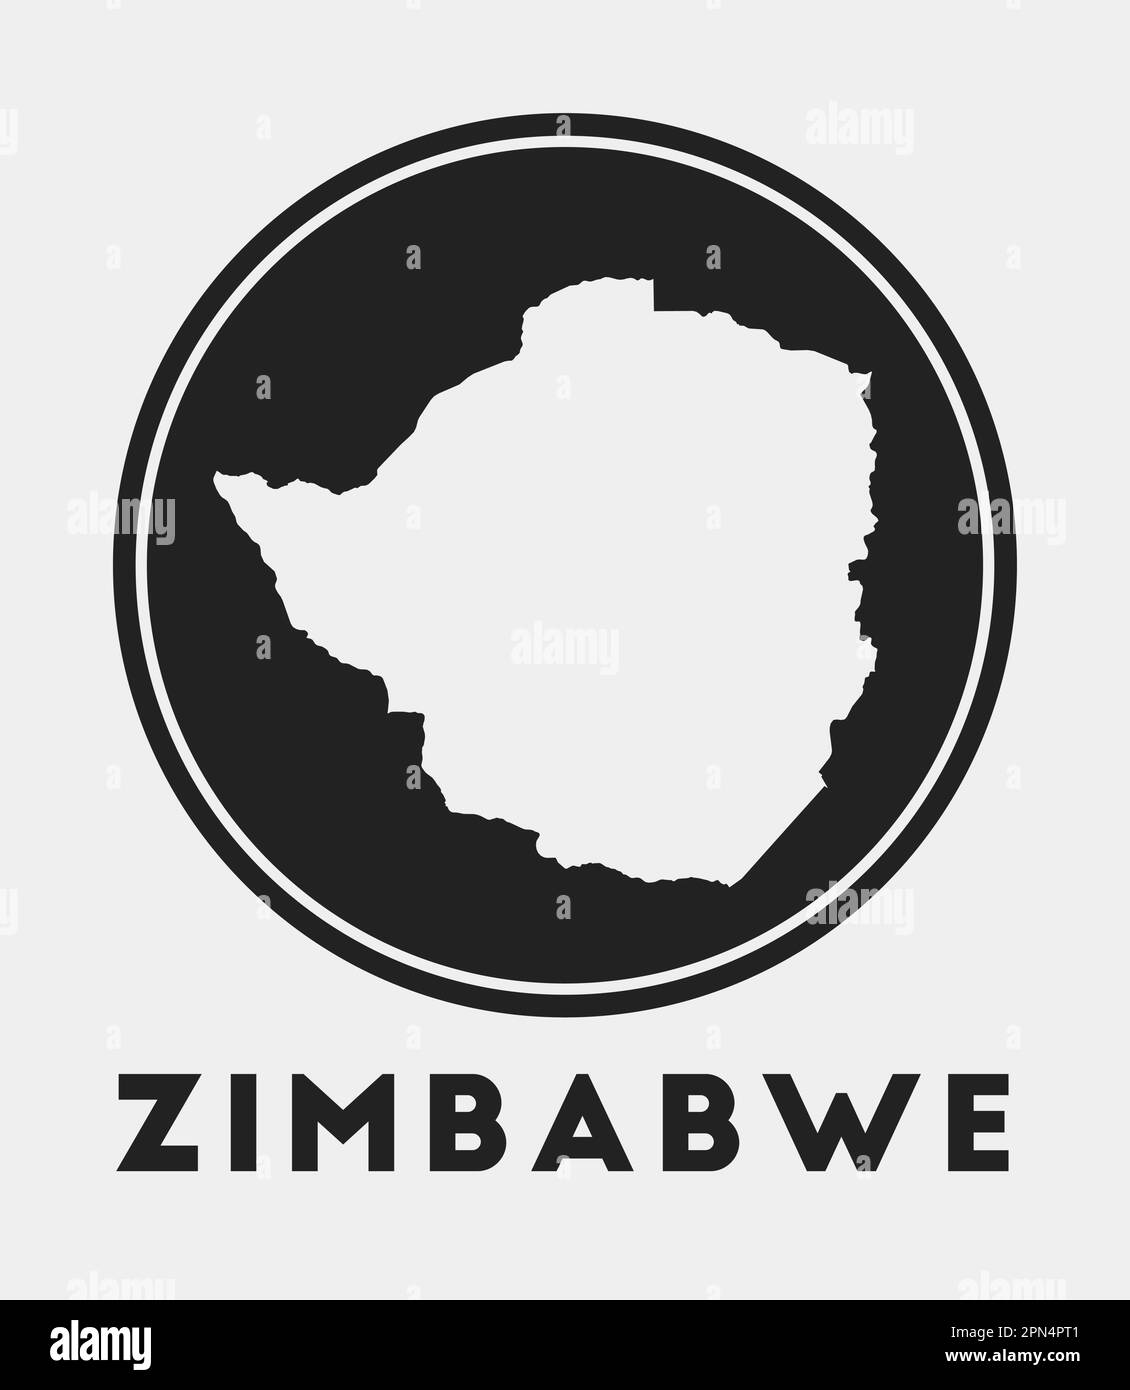 Zimbabwe icon. Round logo with country map and title. Stylish Zimbabwe badge with map. Vector illustration. Stock Vector